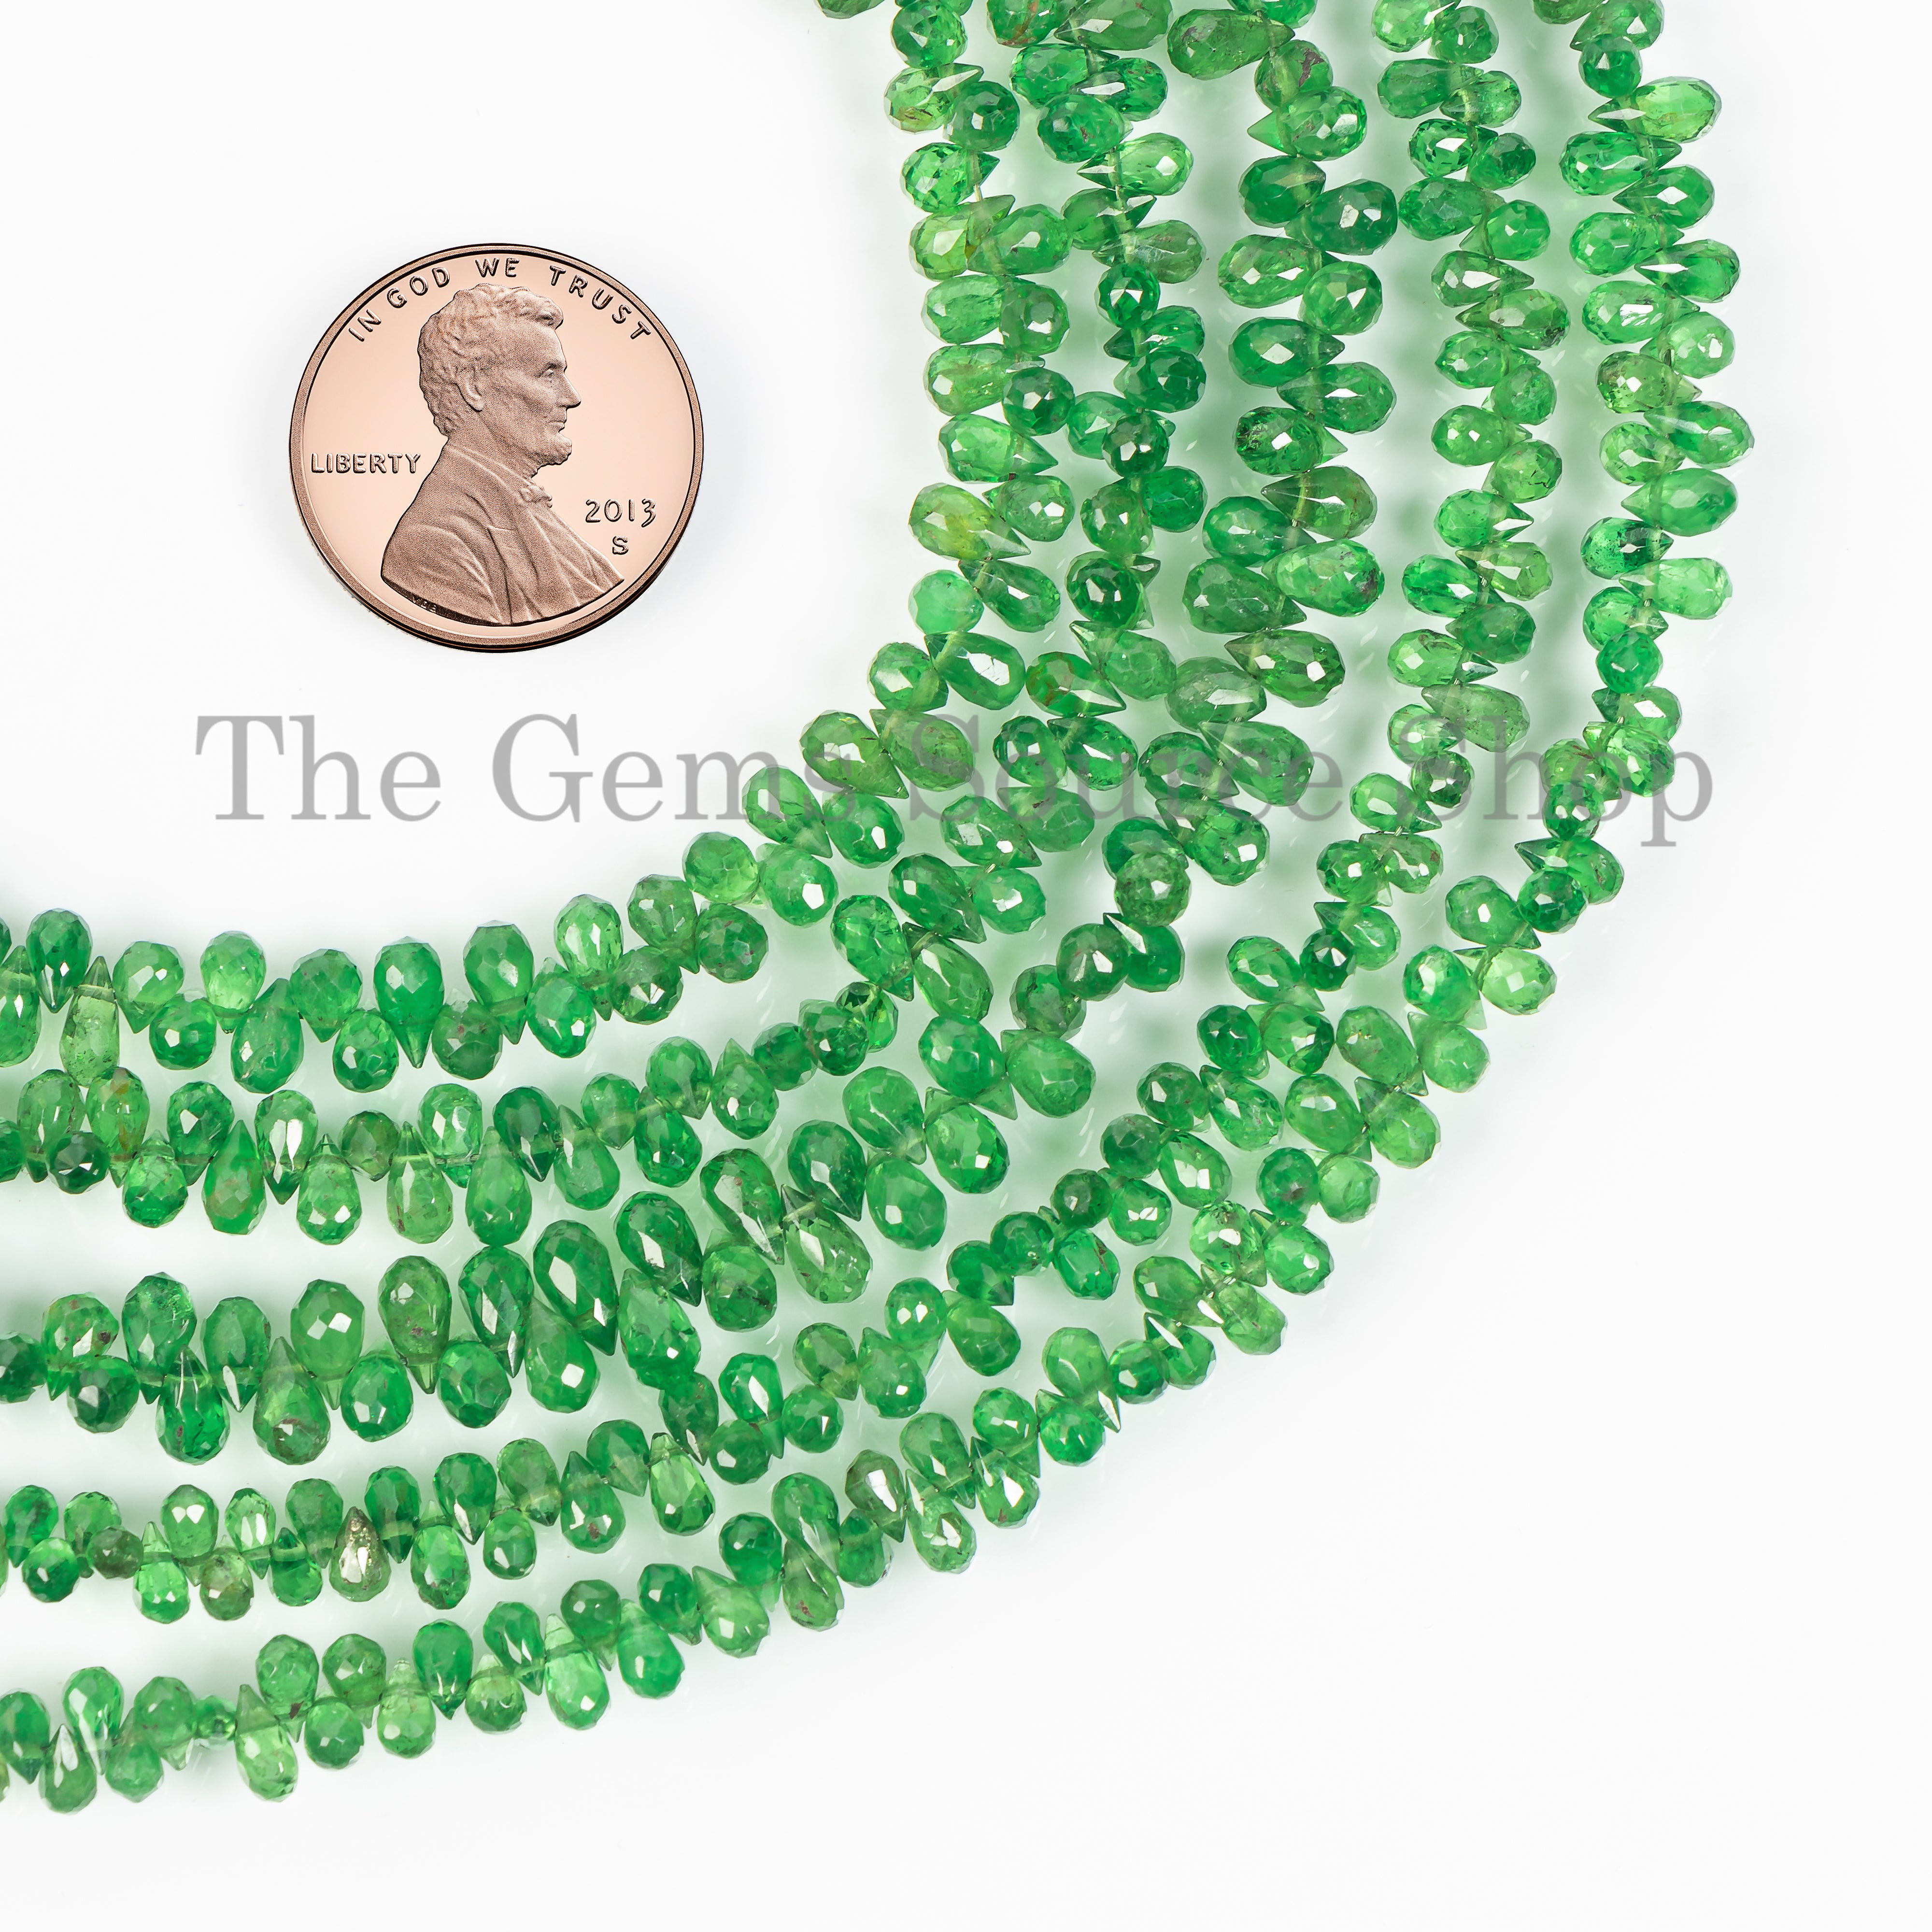 Top Quality Tsavorite Gemstone Beads, Tsavorite Faceted Drops Shape Beads